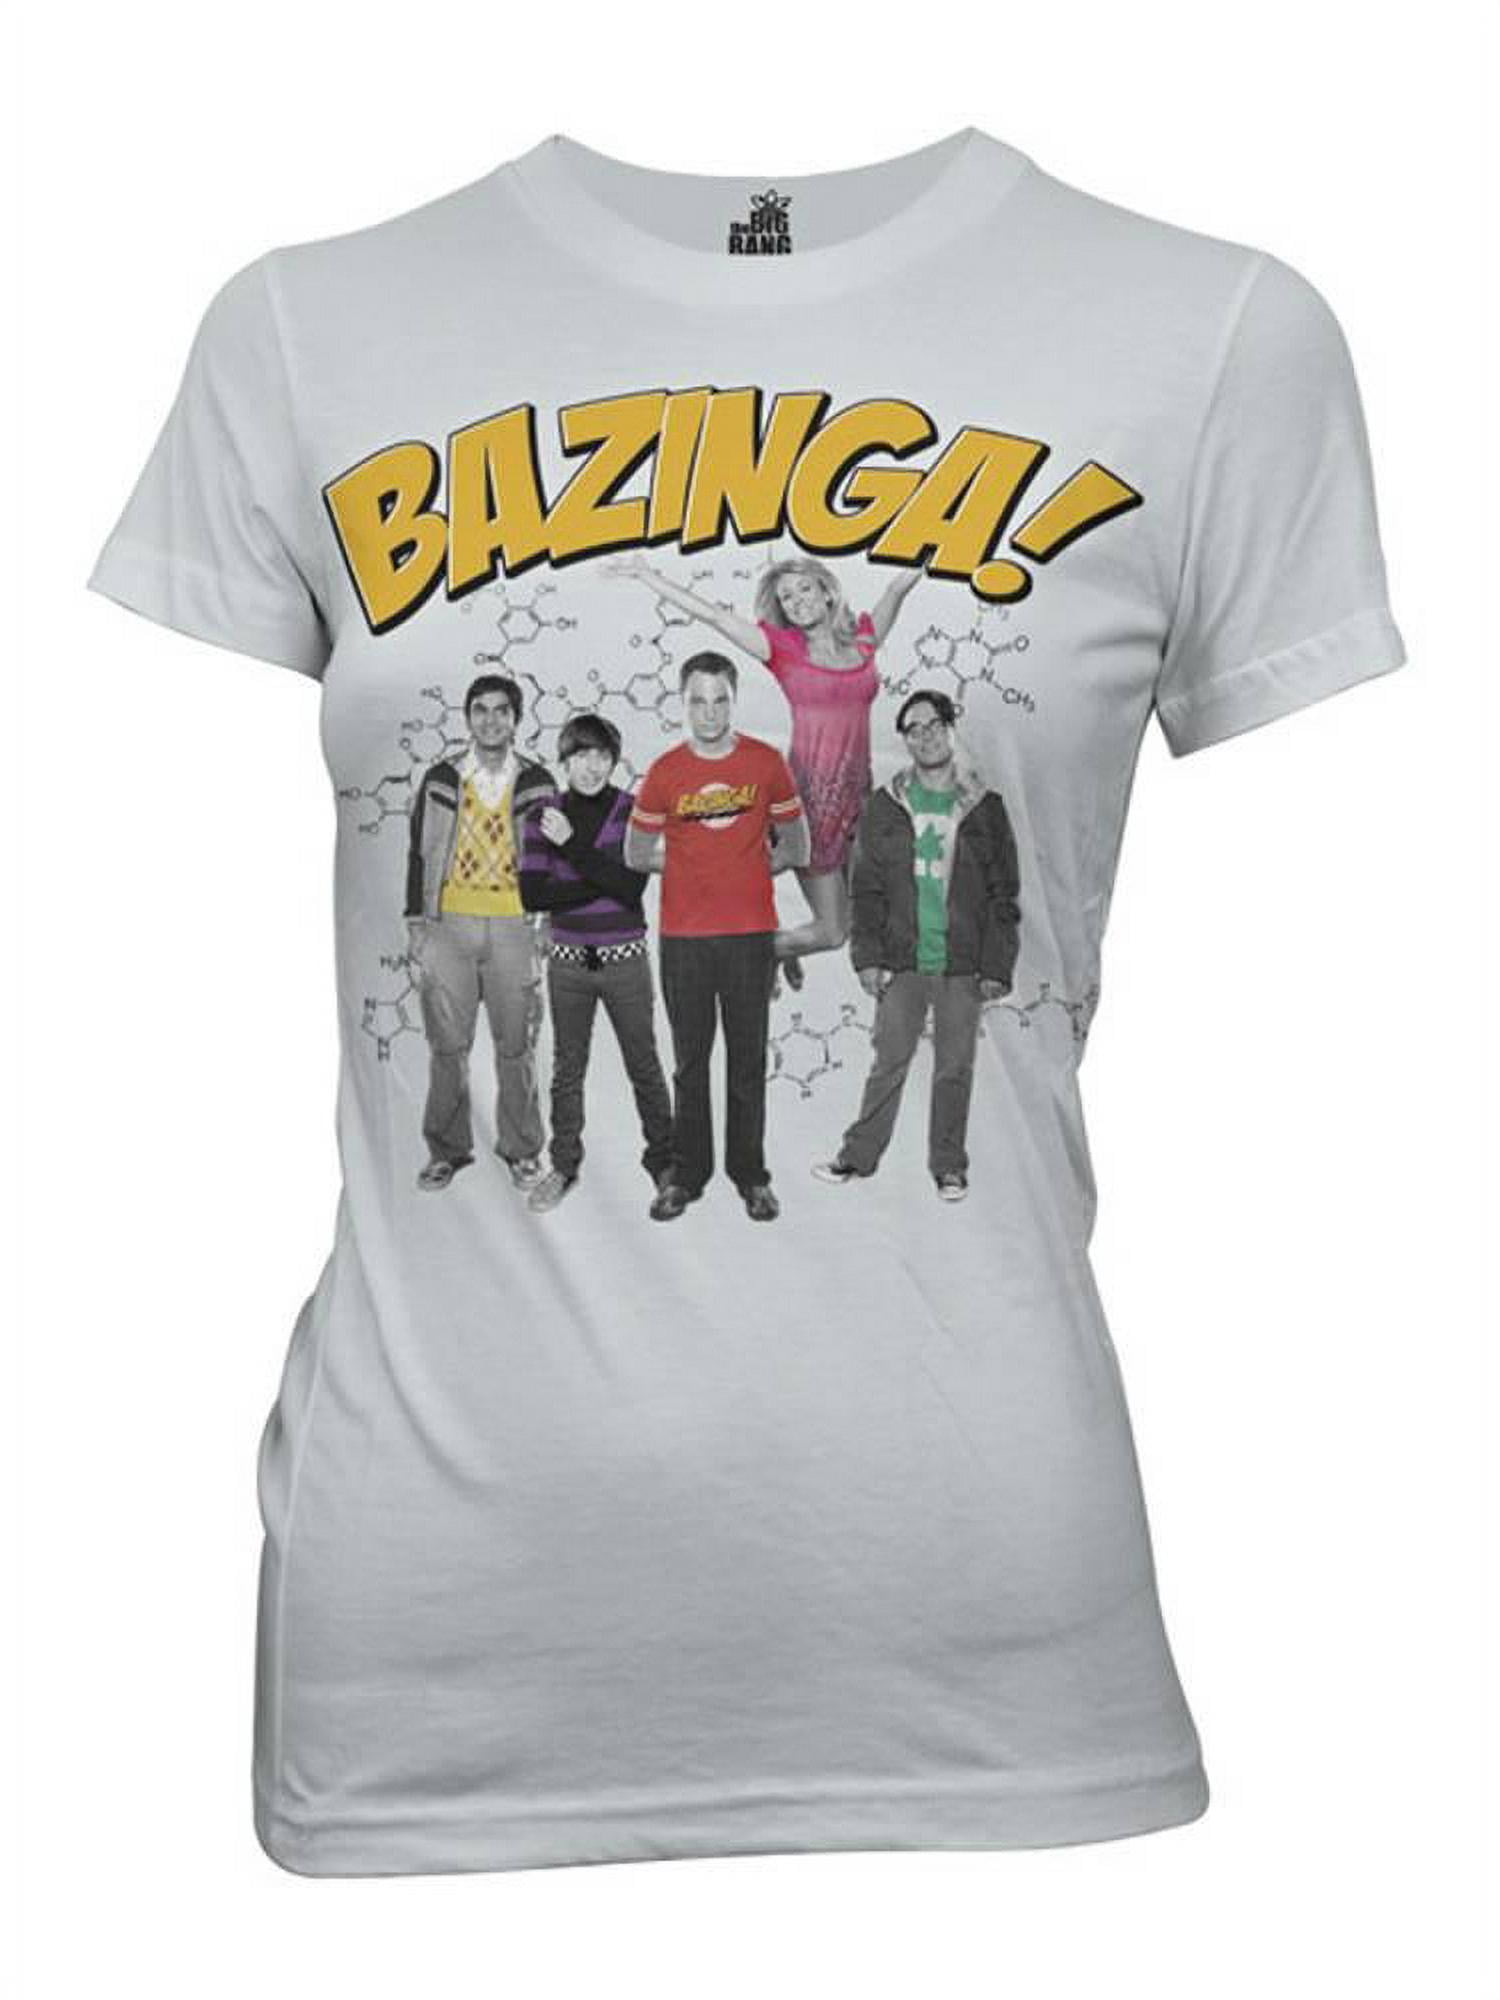 Big Bang Theory Bazinga T-Shirt Group Juniors